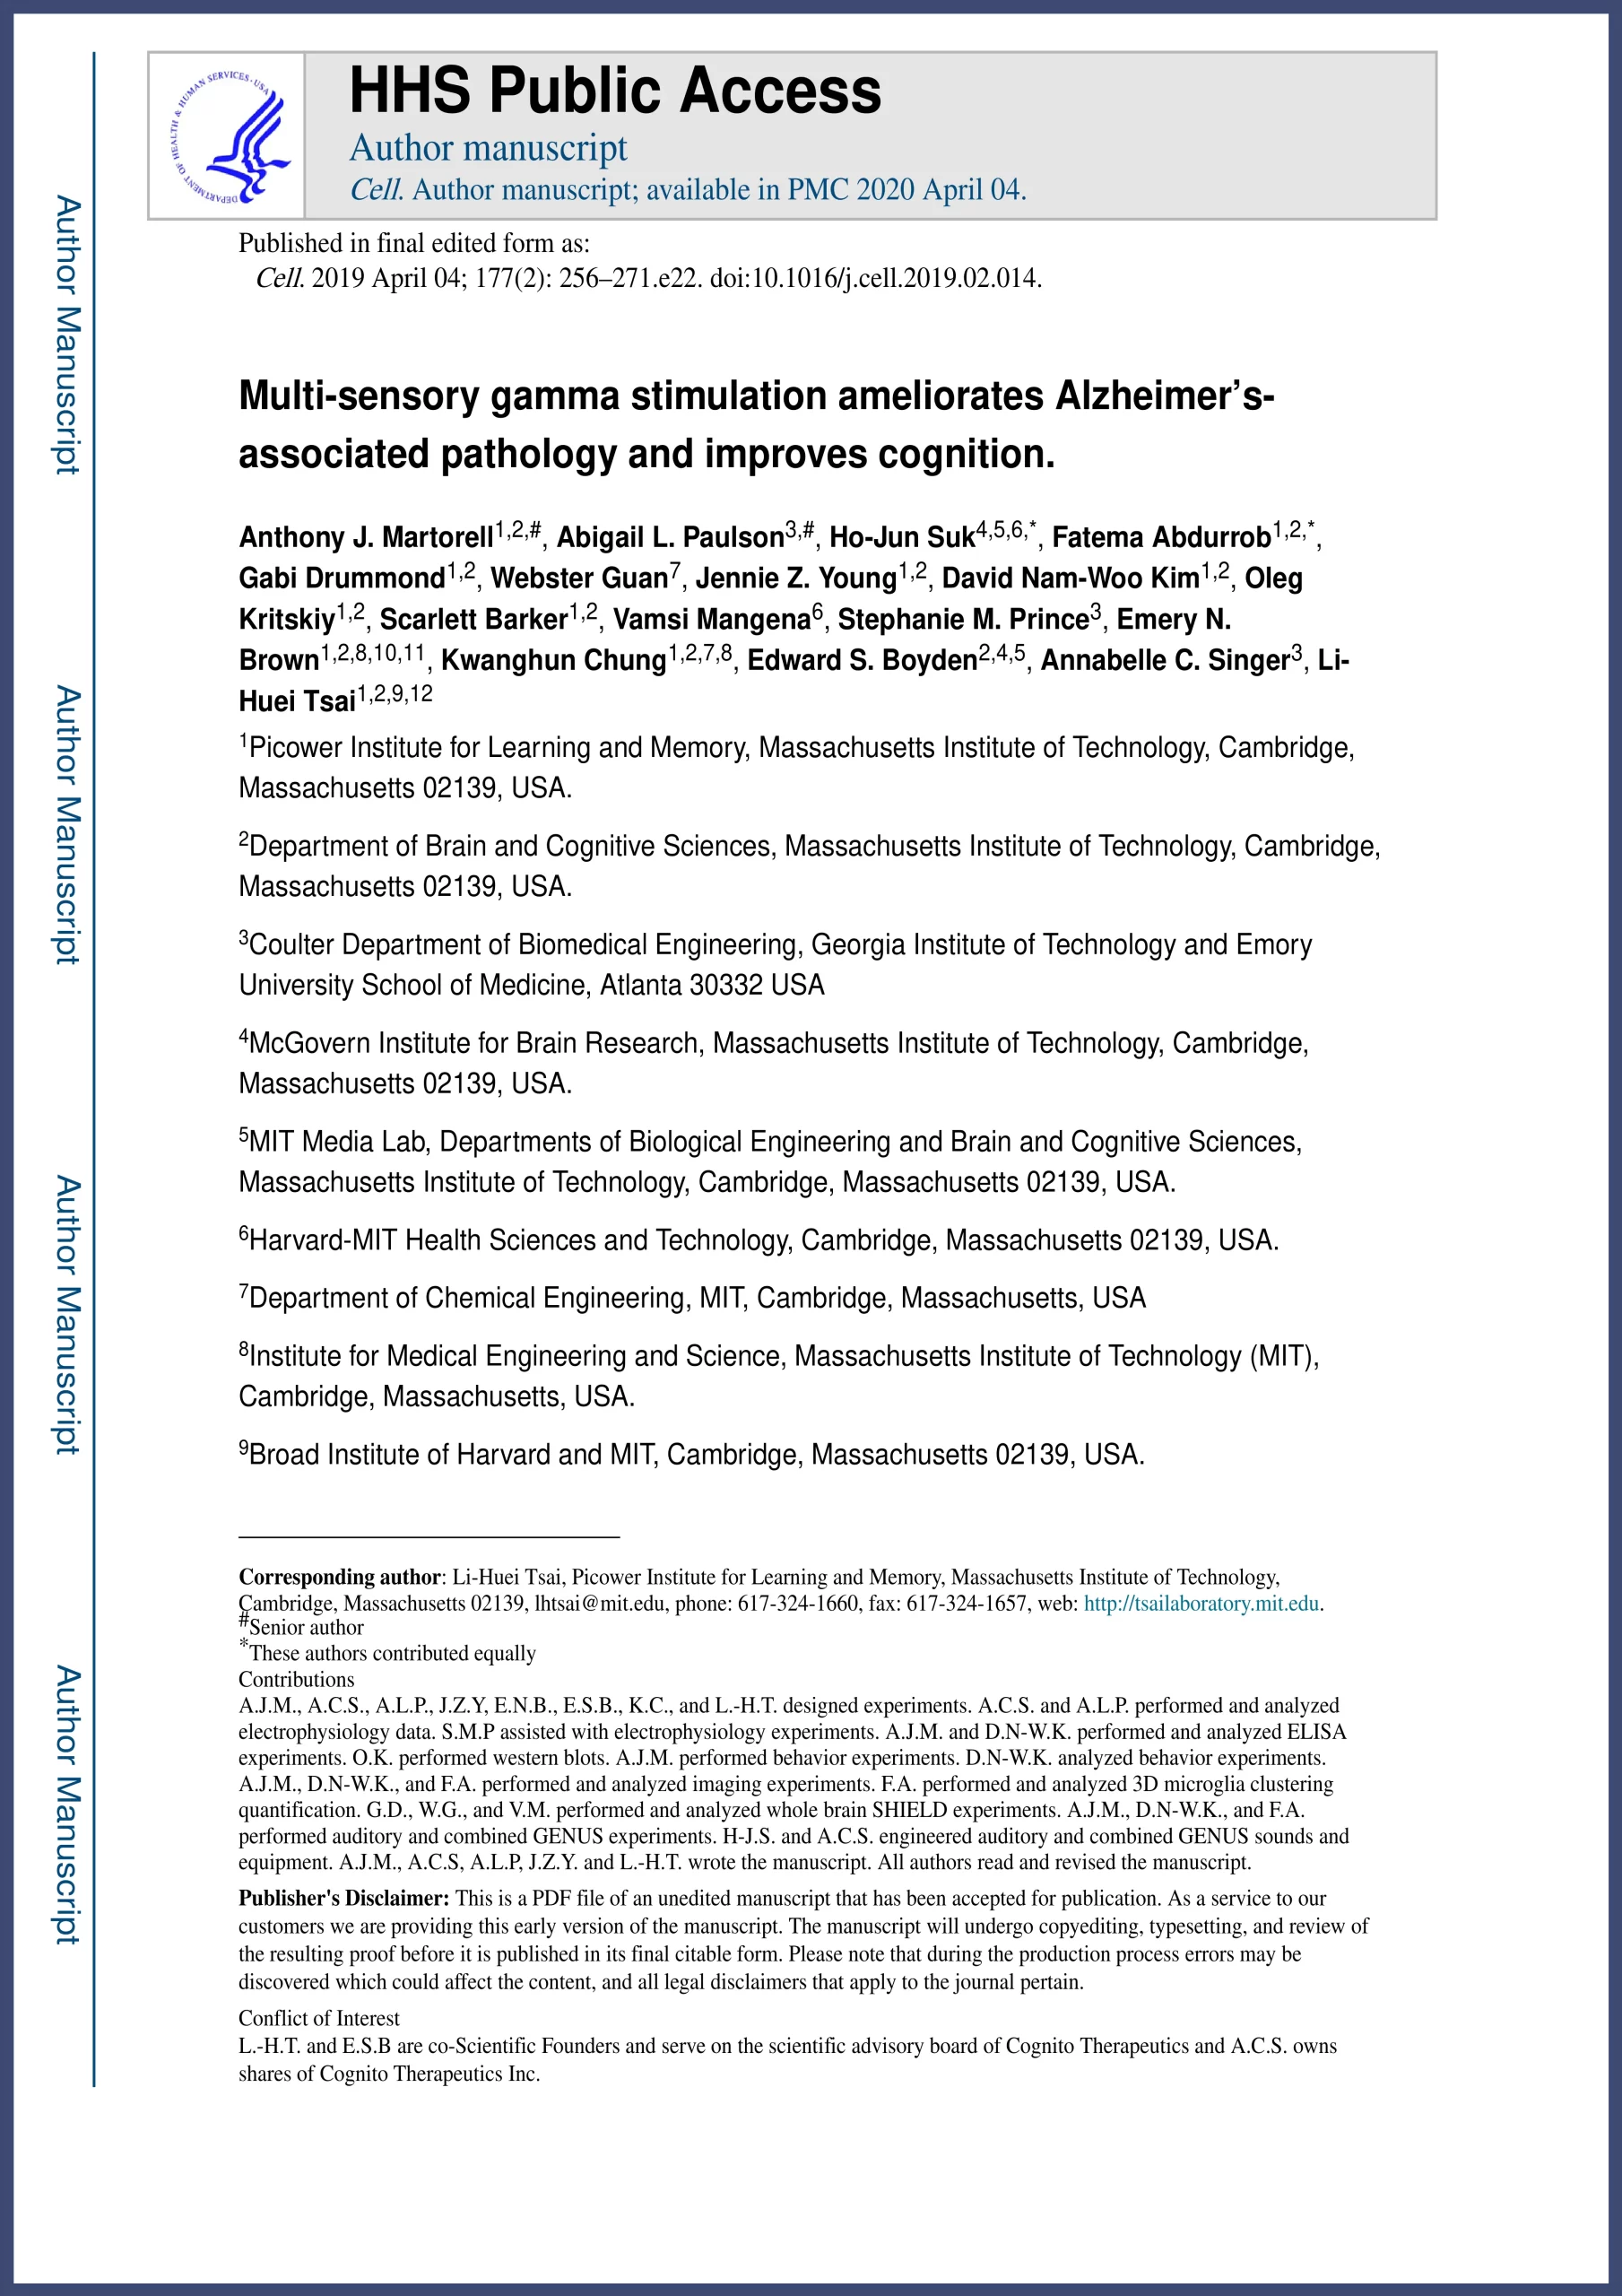 Multi-sensory gamma stimulation amellorates Alzheimer's associated pathology and improves condition publication by Martorell et. al. 2019